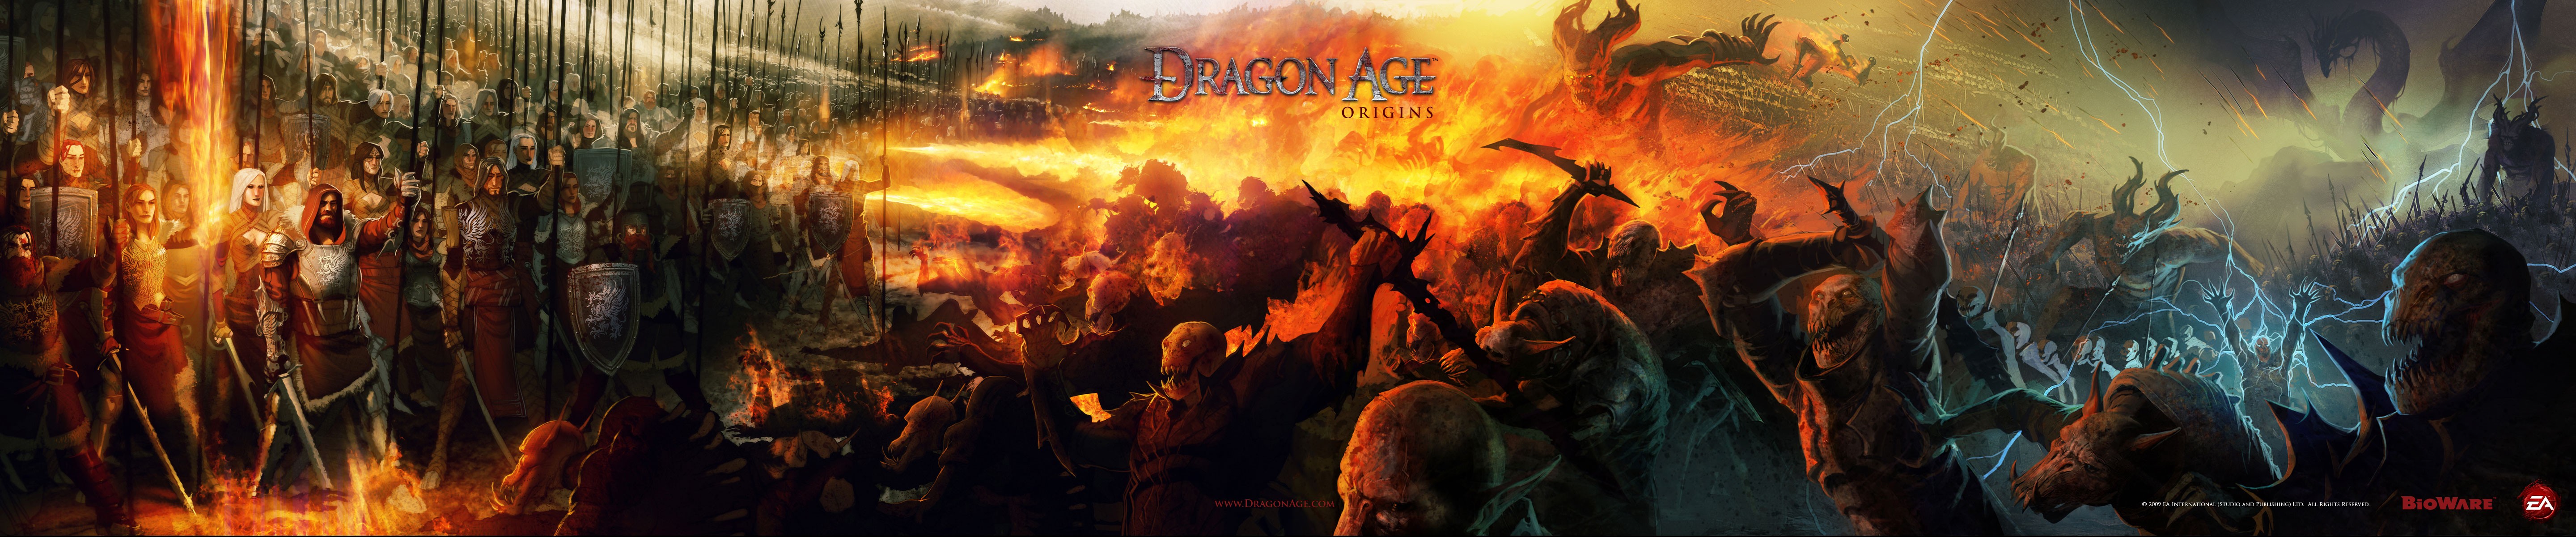 General 5760x1200 Dragon Age: Origins triple screen video games PC gaming RPG